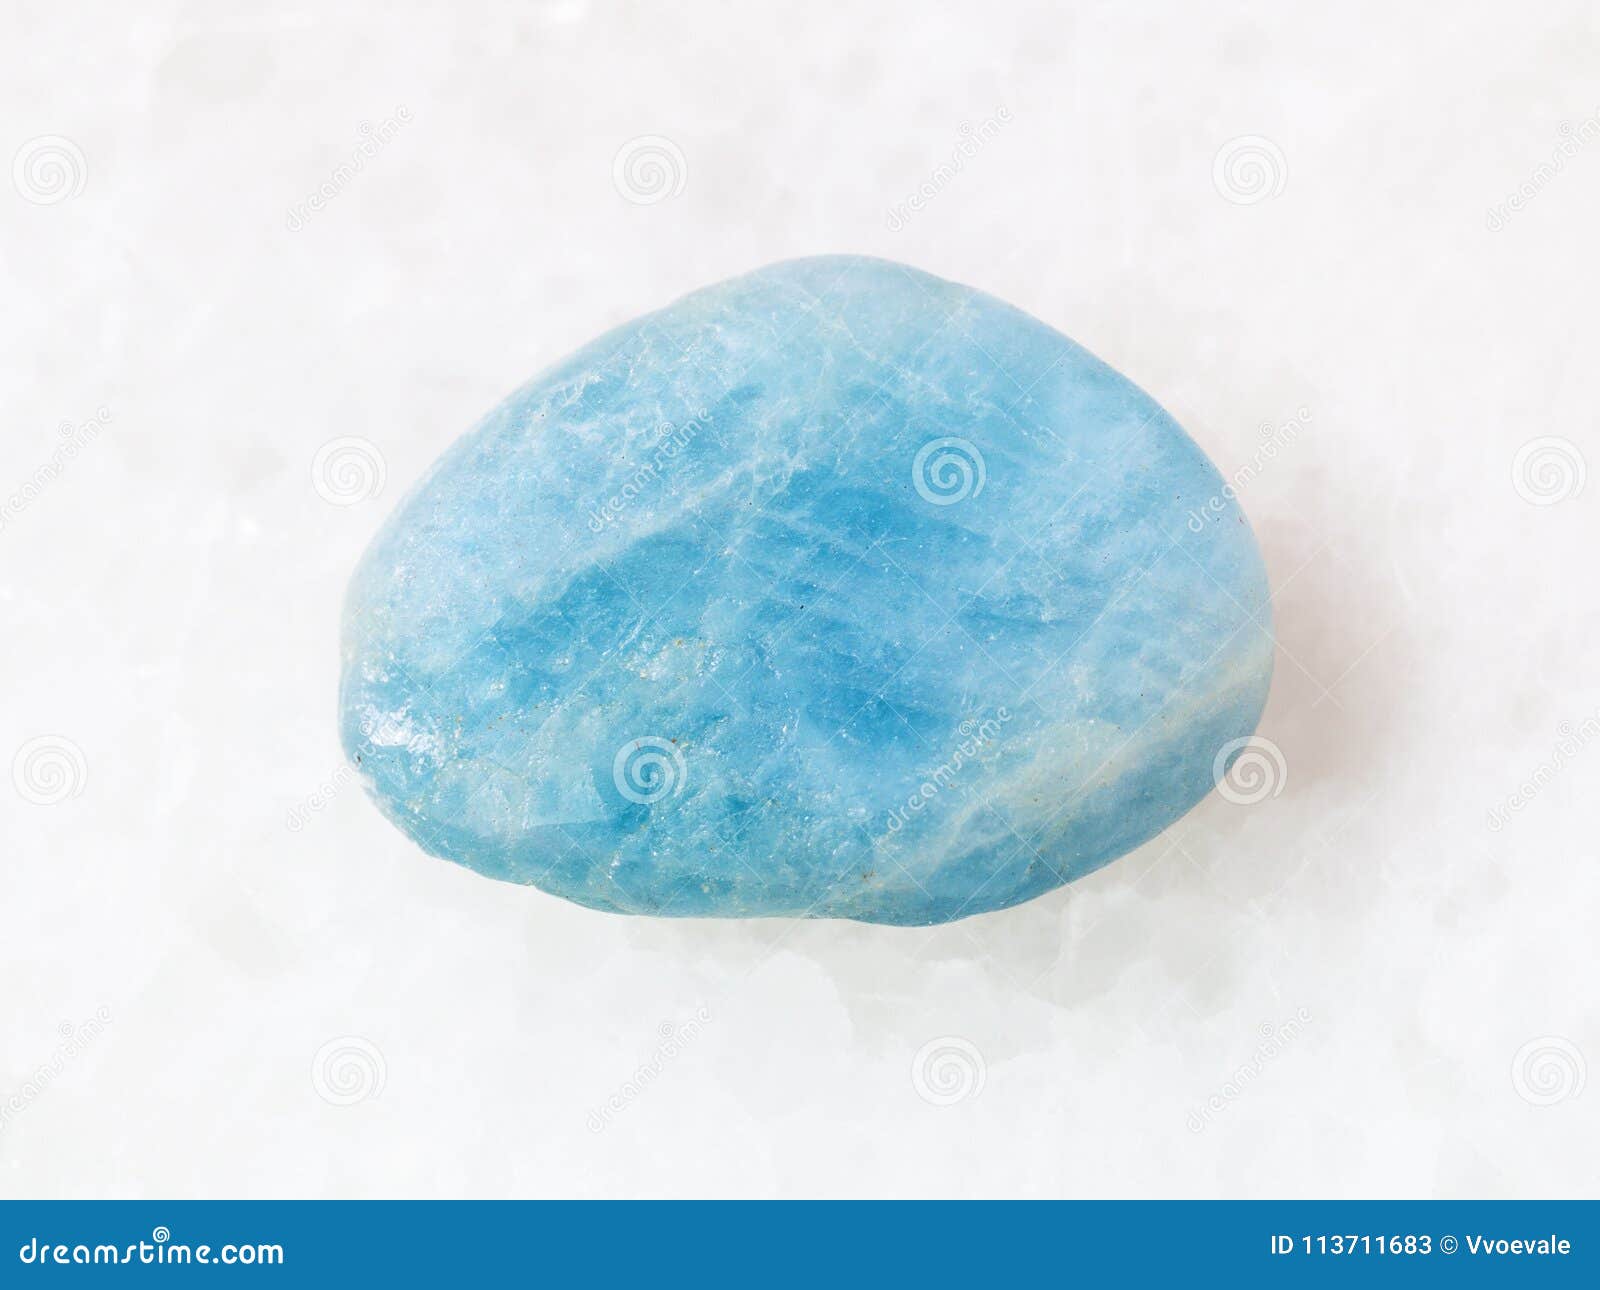 tumbled aquamarine (blue beryl) gem stone on white